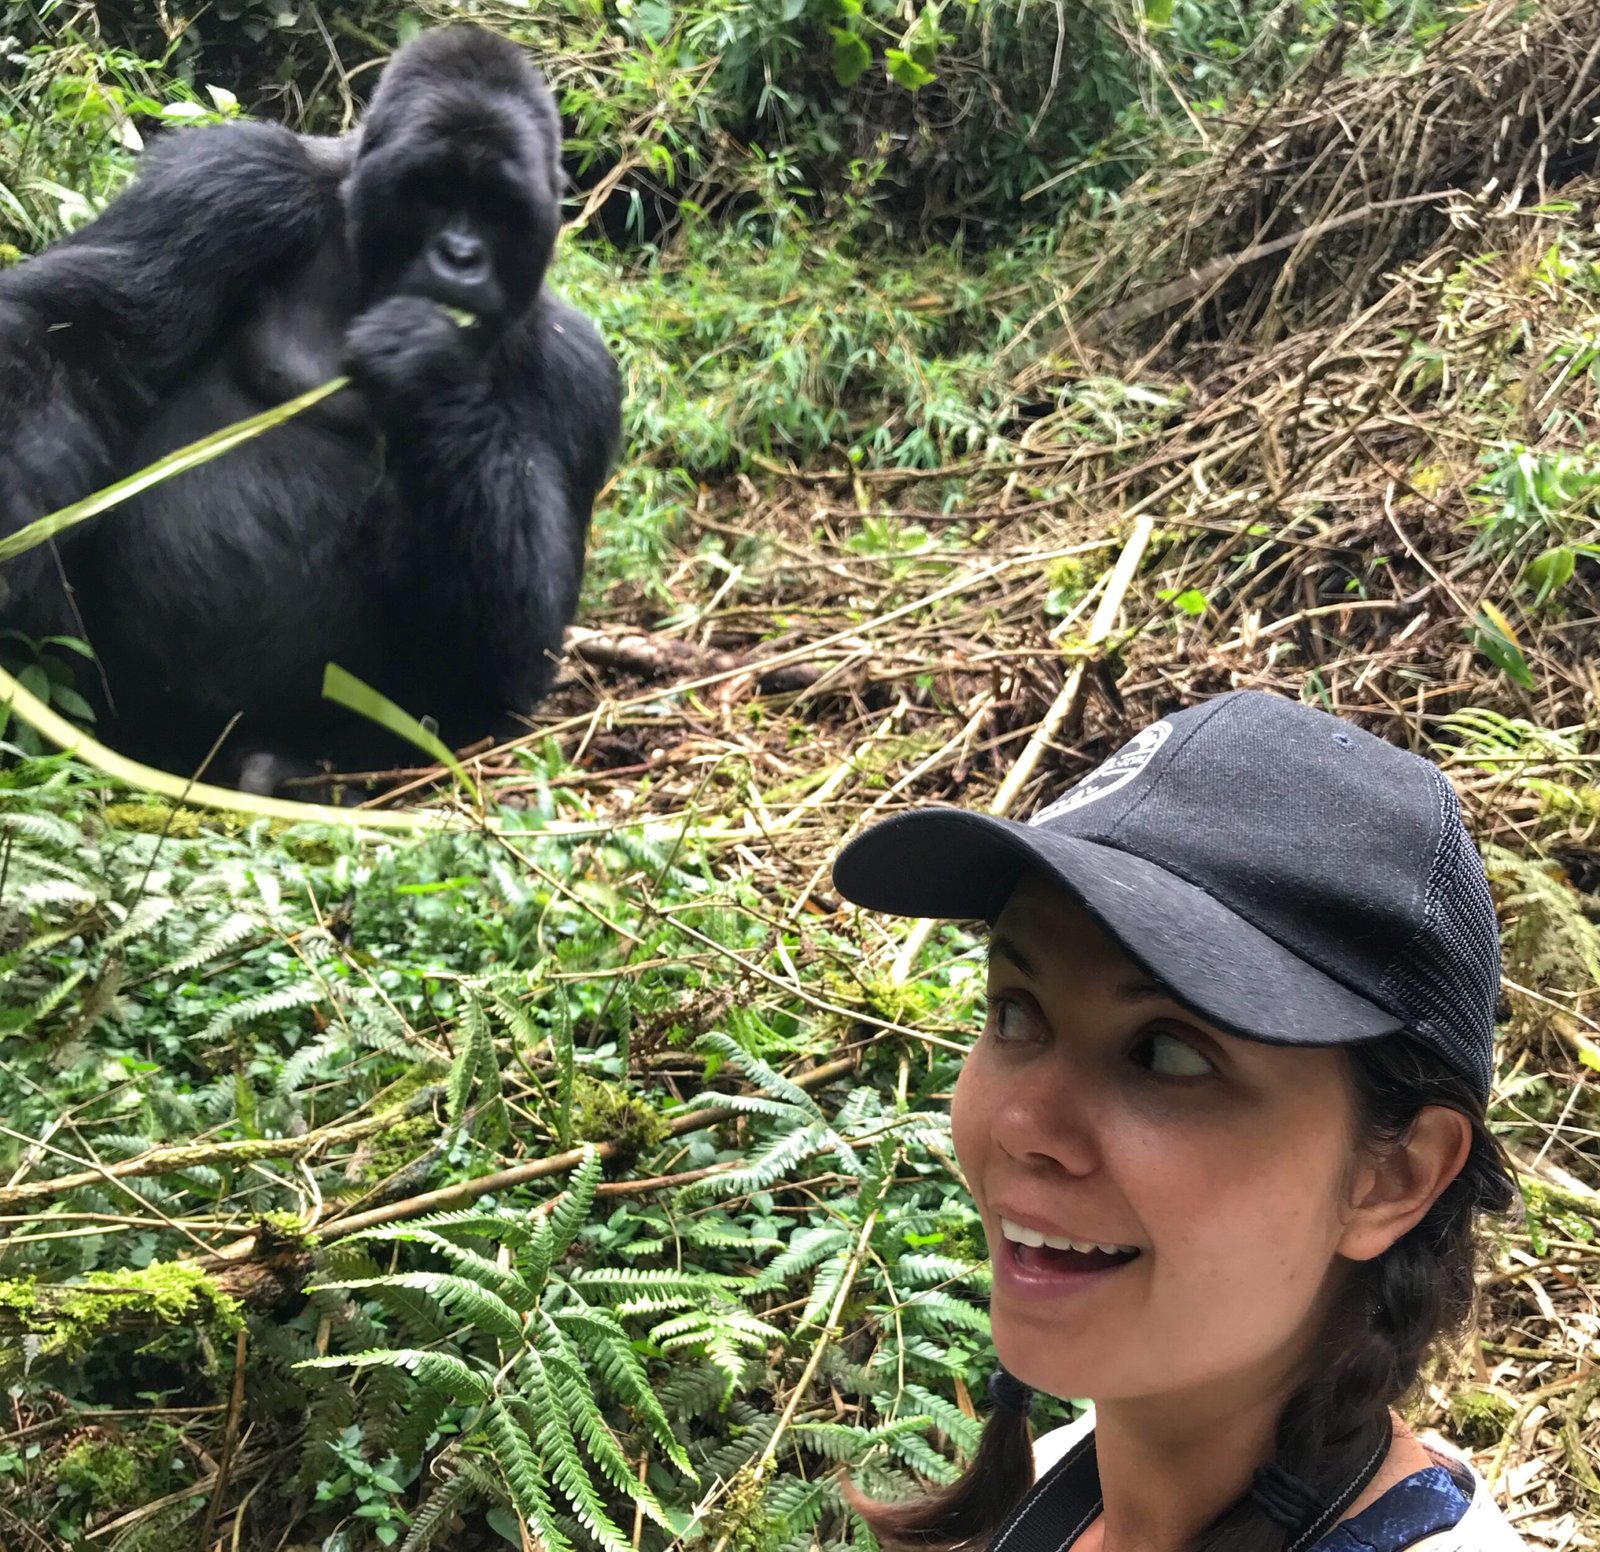 Selfie with a gorilla 